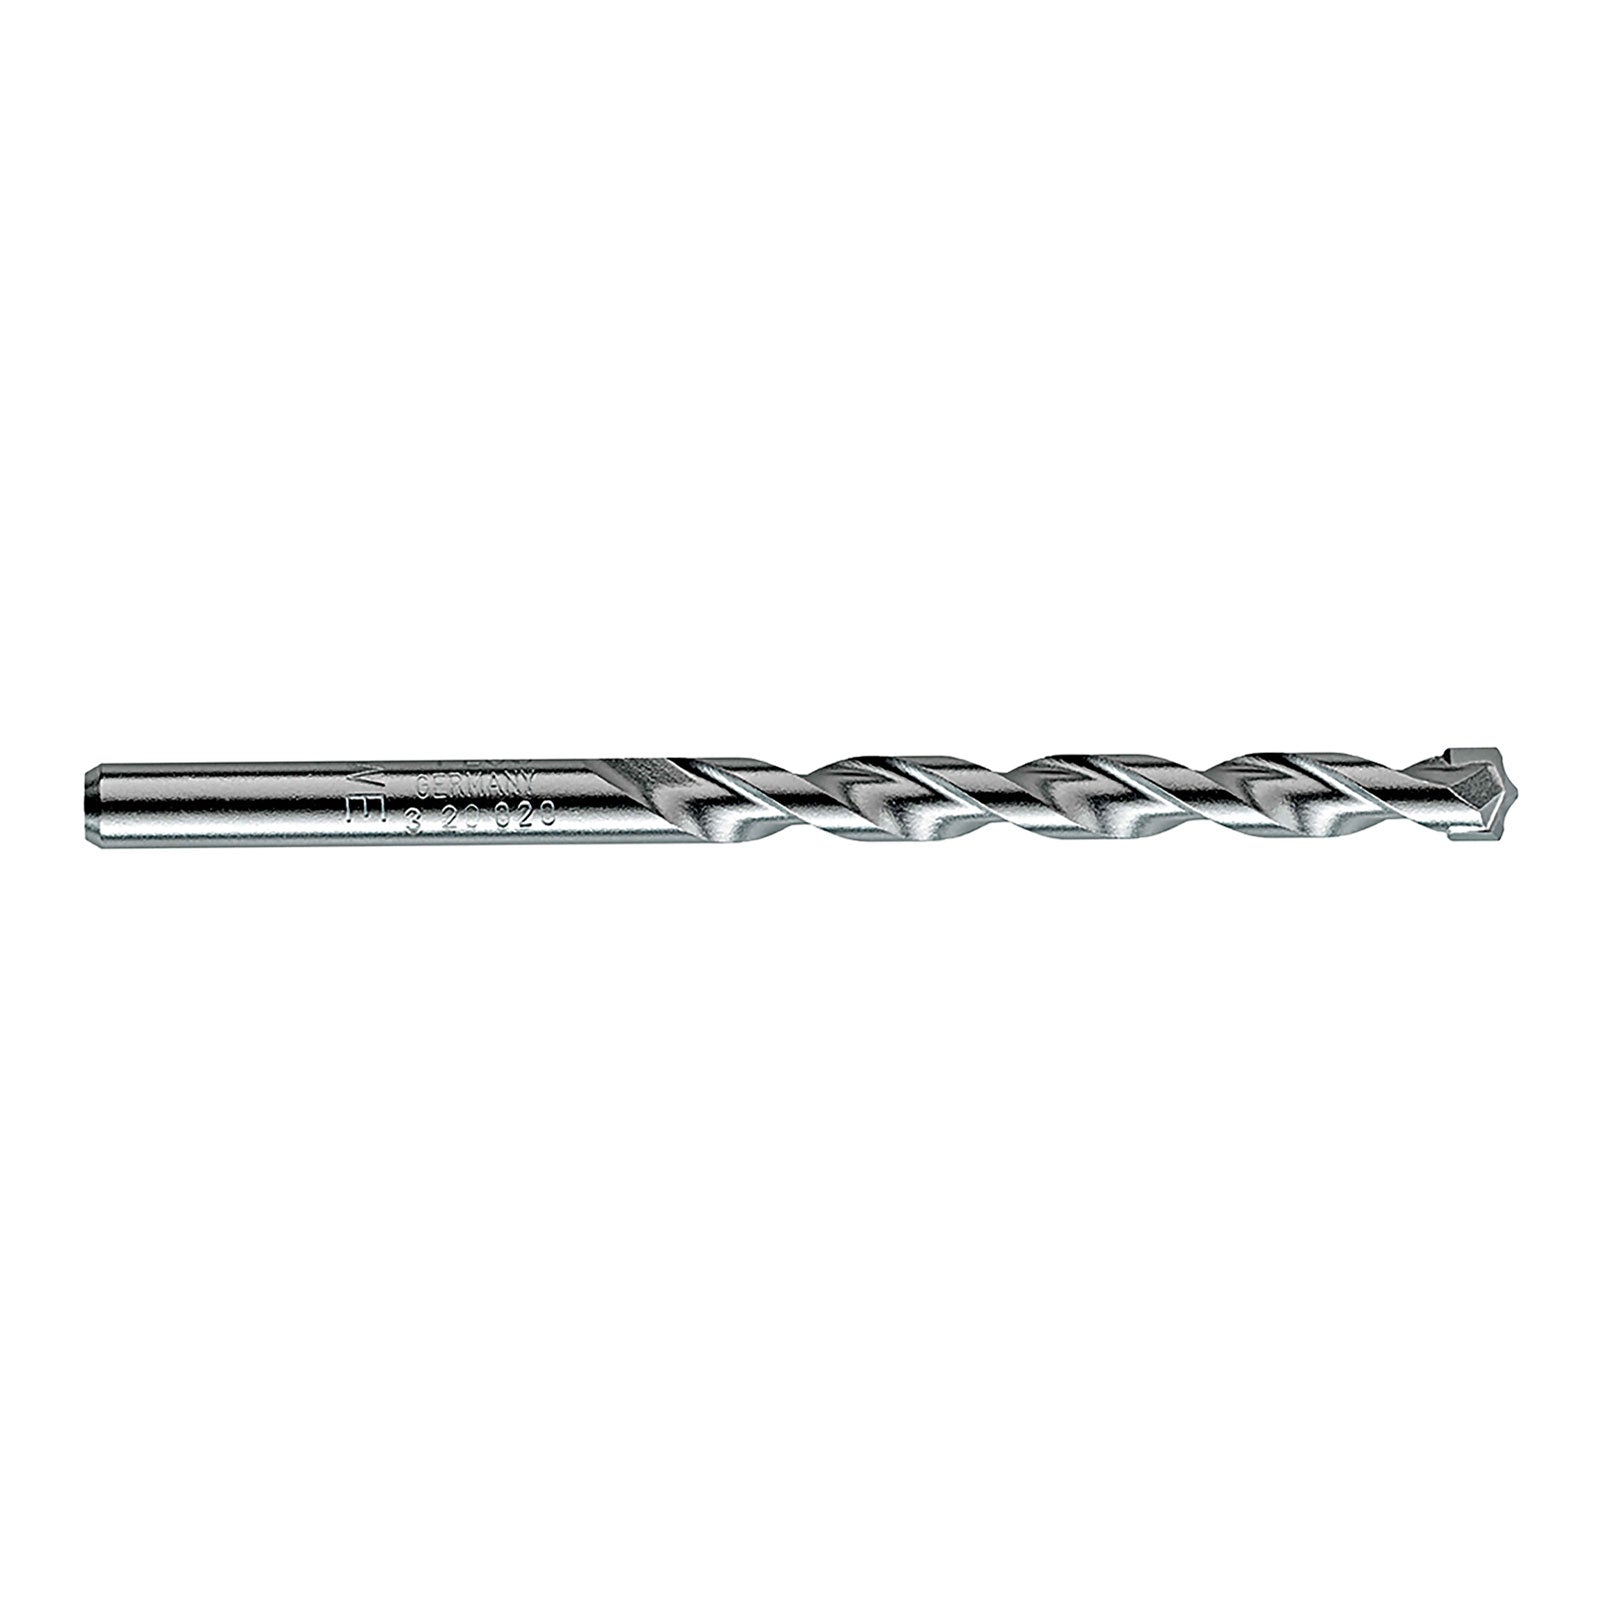 14 inch x 4 inch Simpson Straight Shank Masonry Drill Bit Carbide Tip Pkg 25